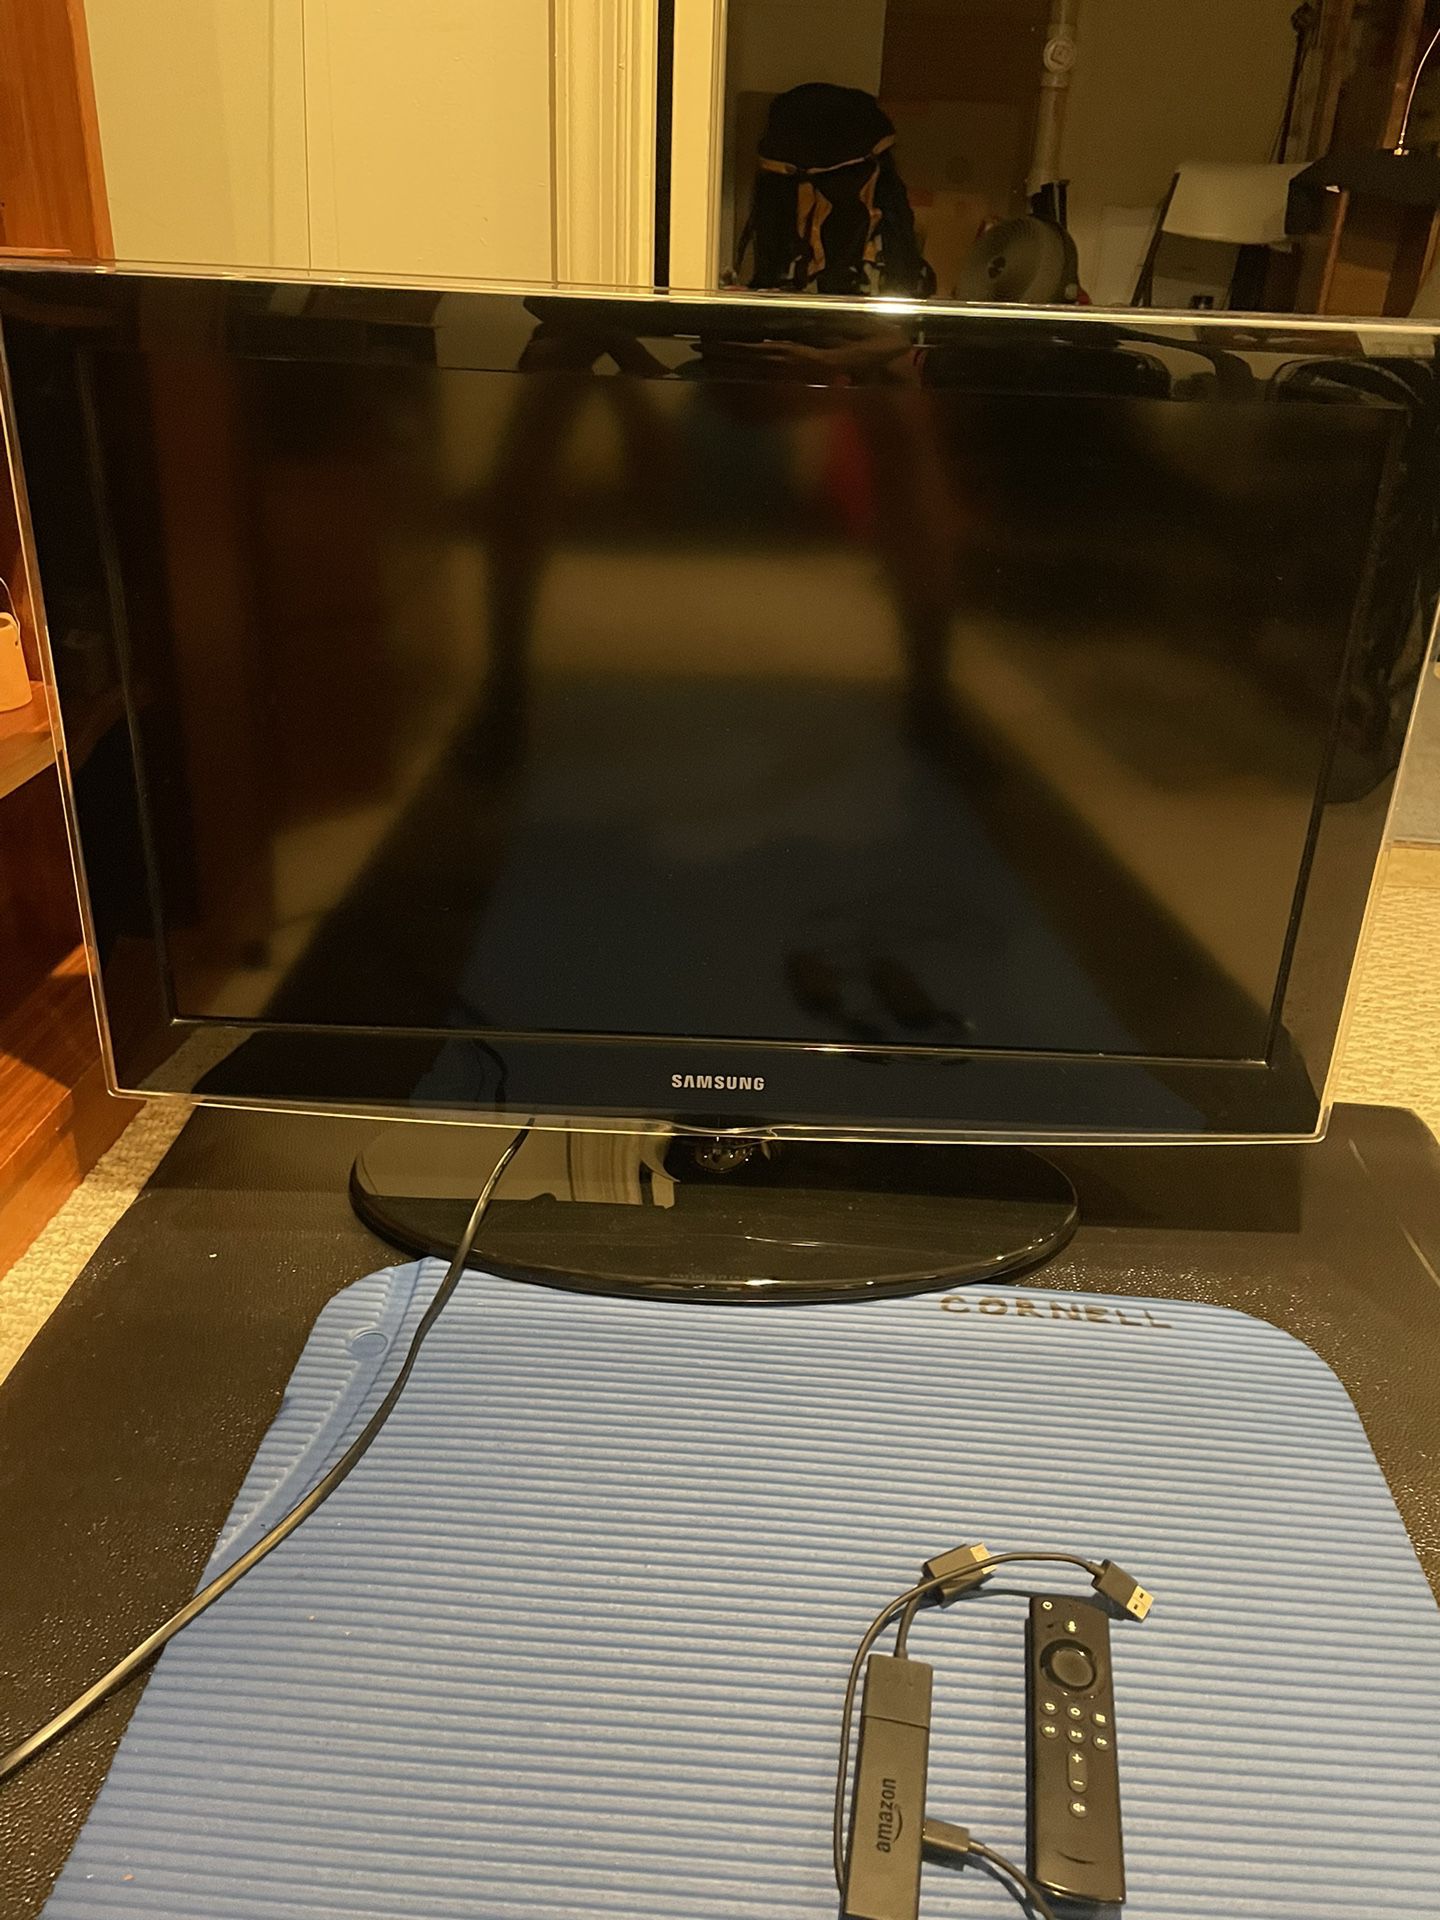 Samsung HD TV 32 Inch with Amazon Firestick 